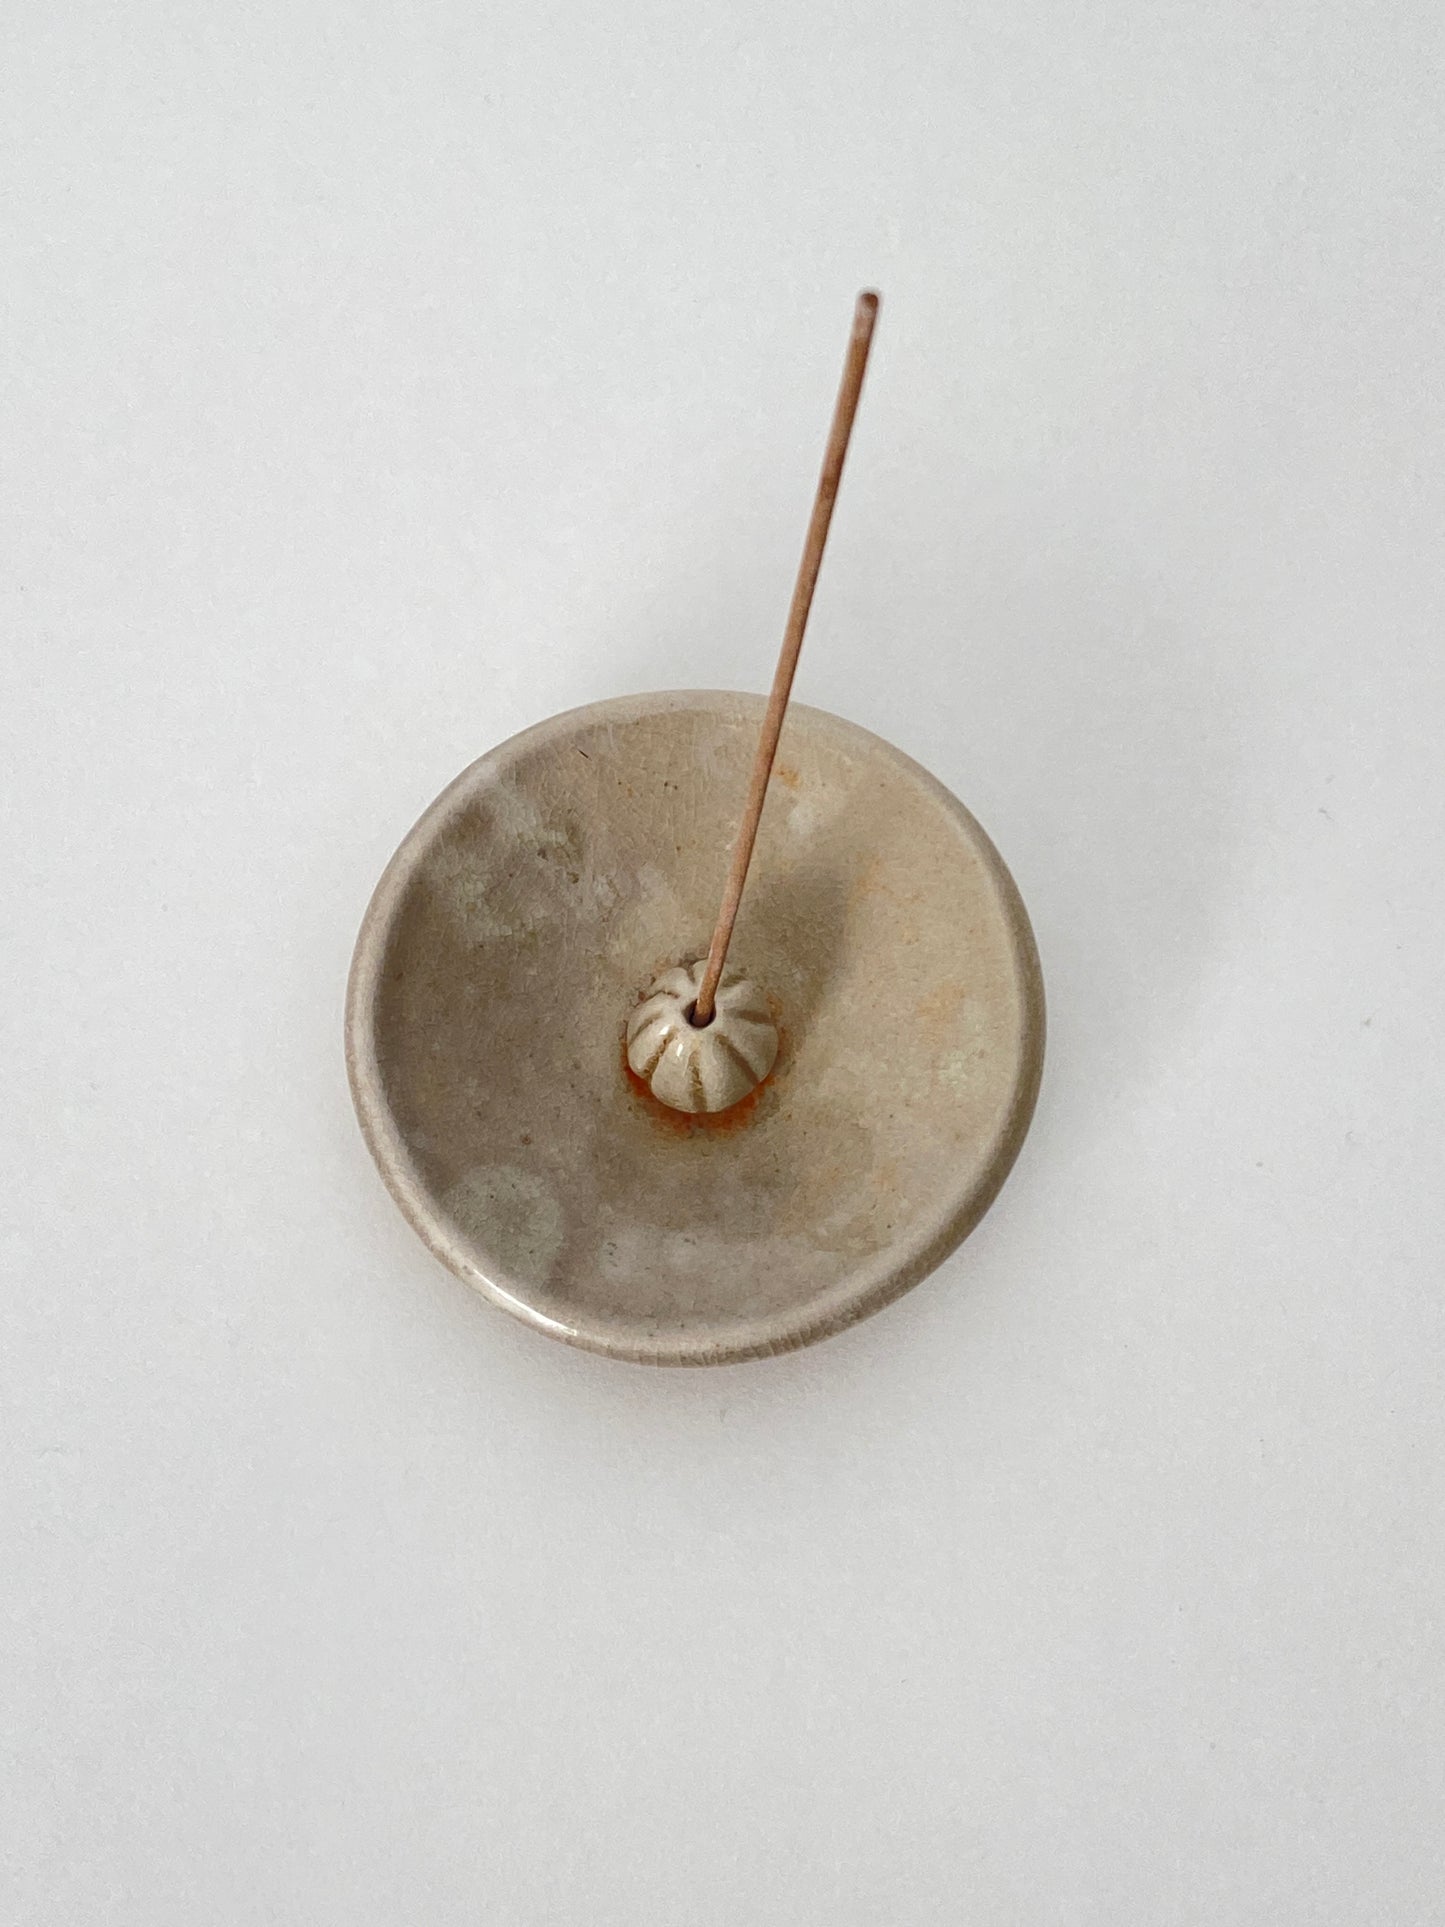 shino fired porcelain incense burner - #6